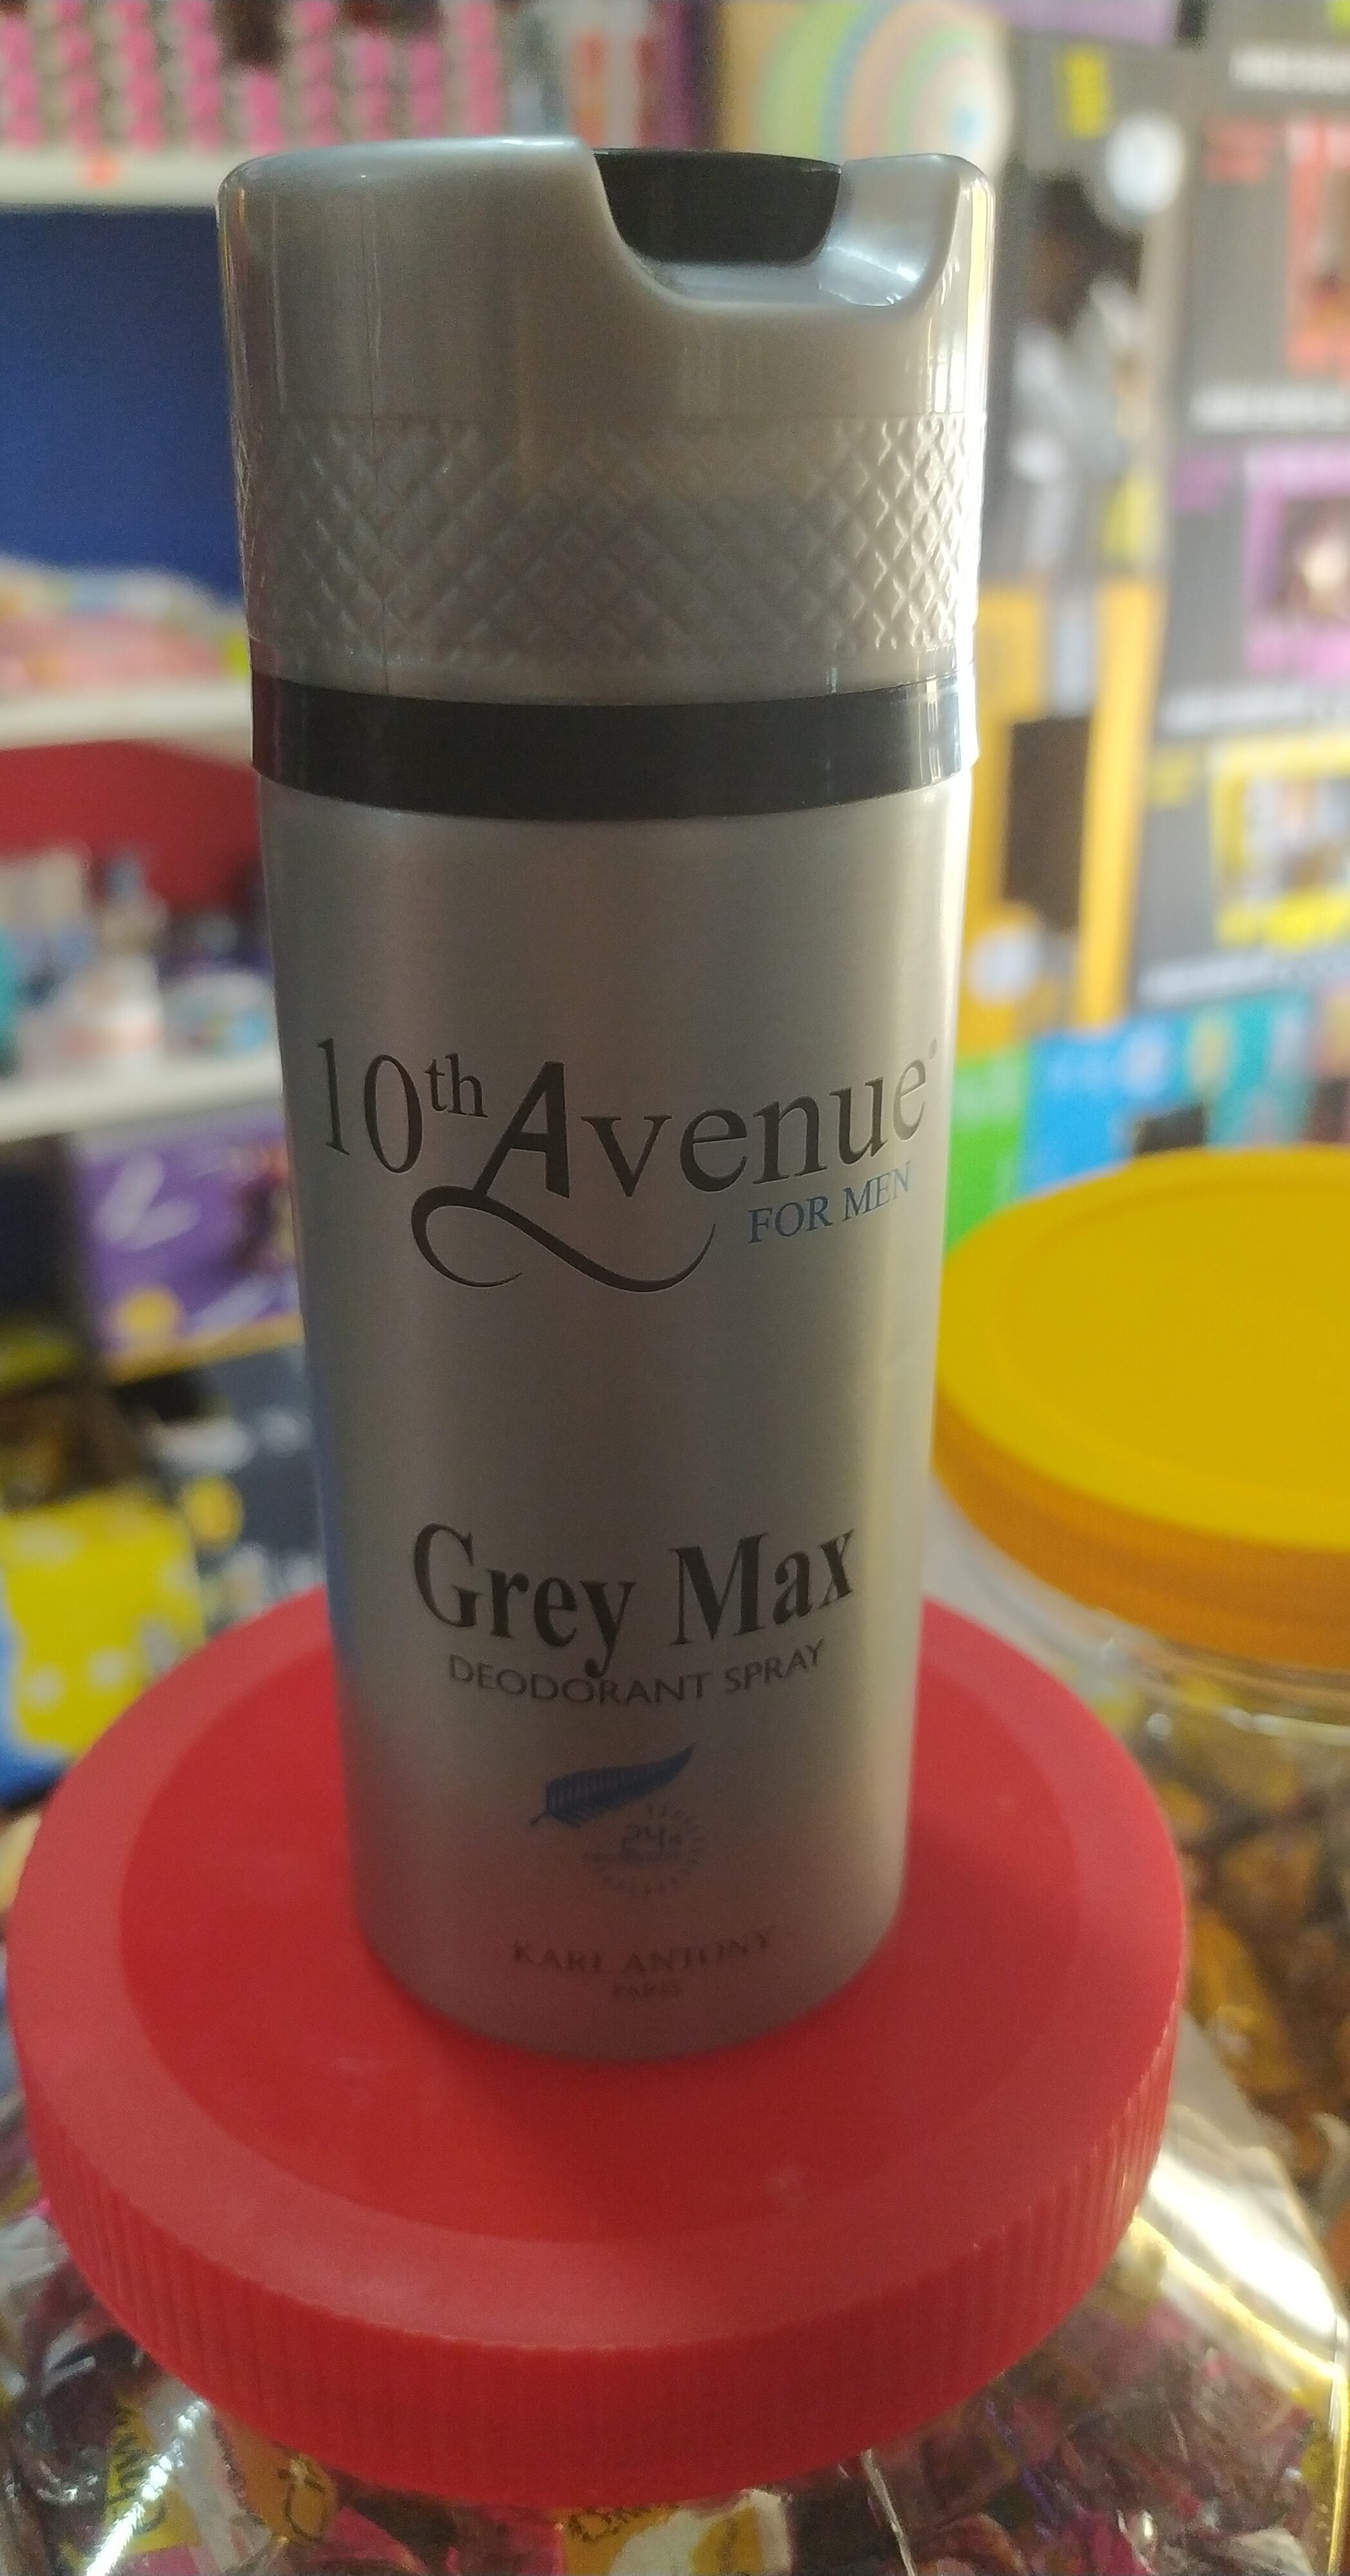 10th avenue grey max - Produit - en